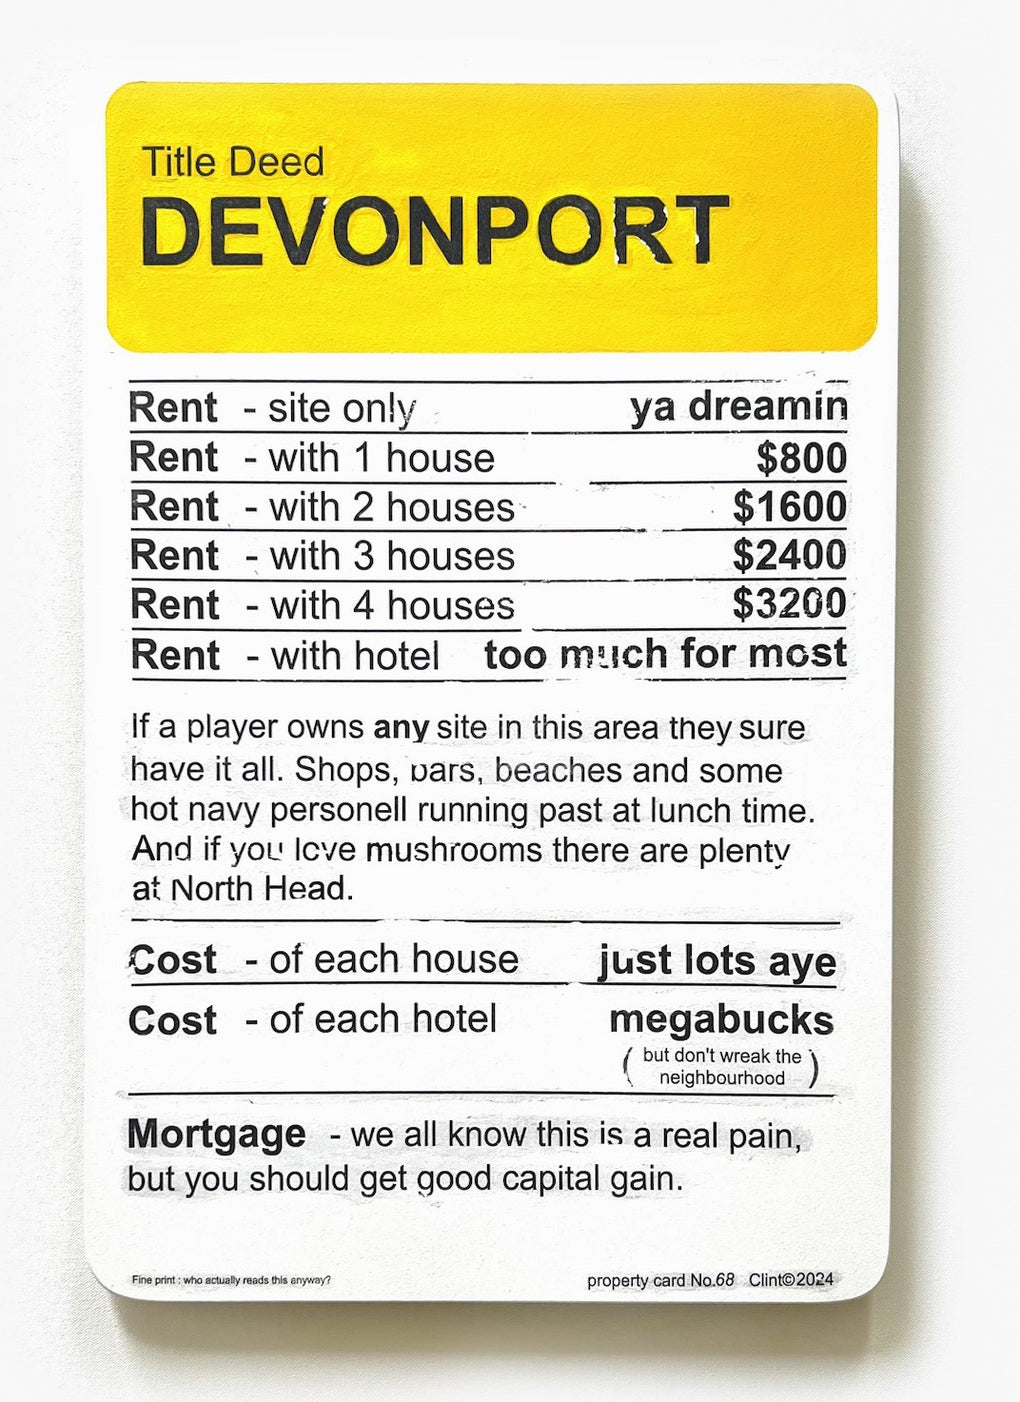 Title Deed Devonport